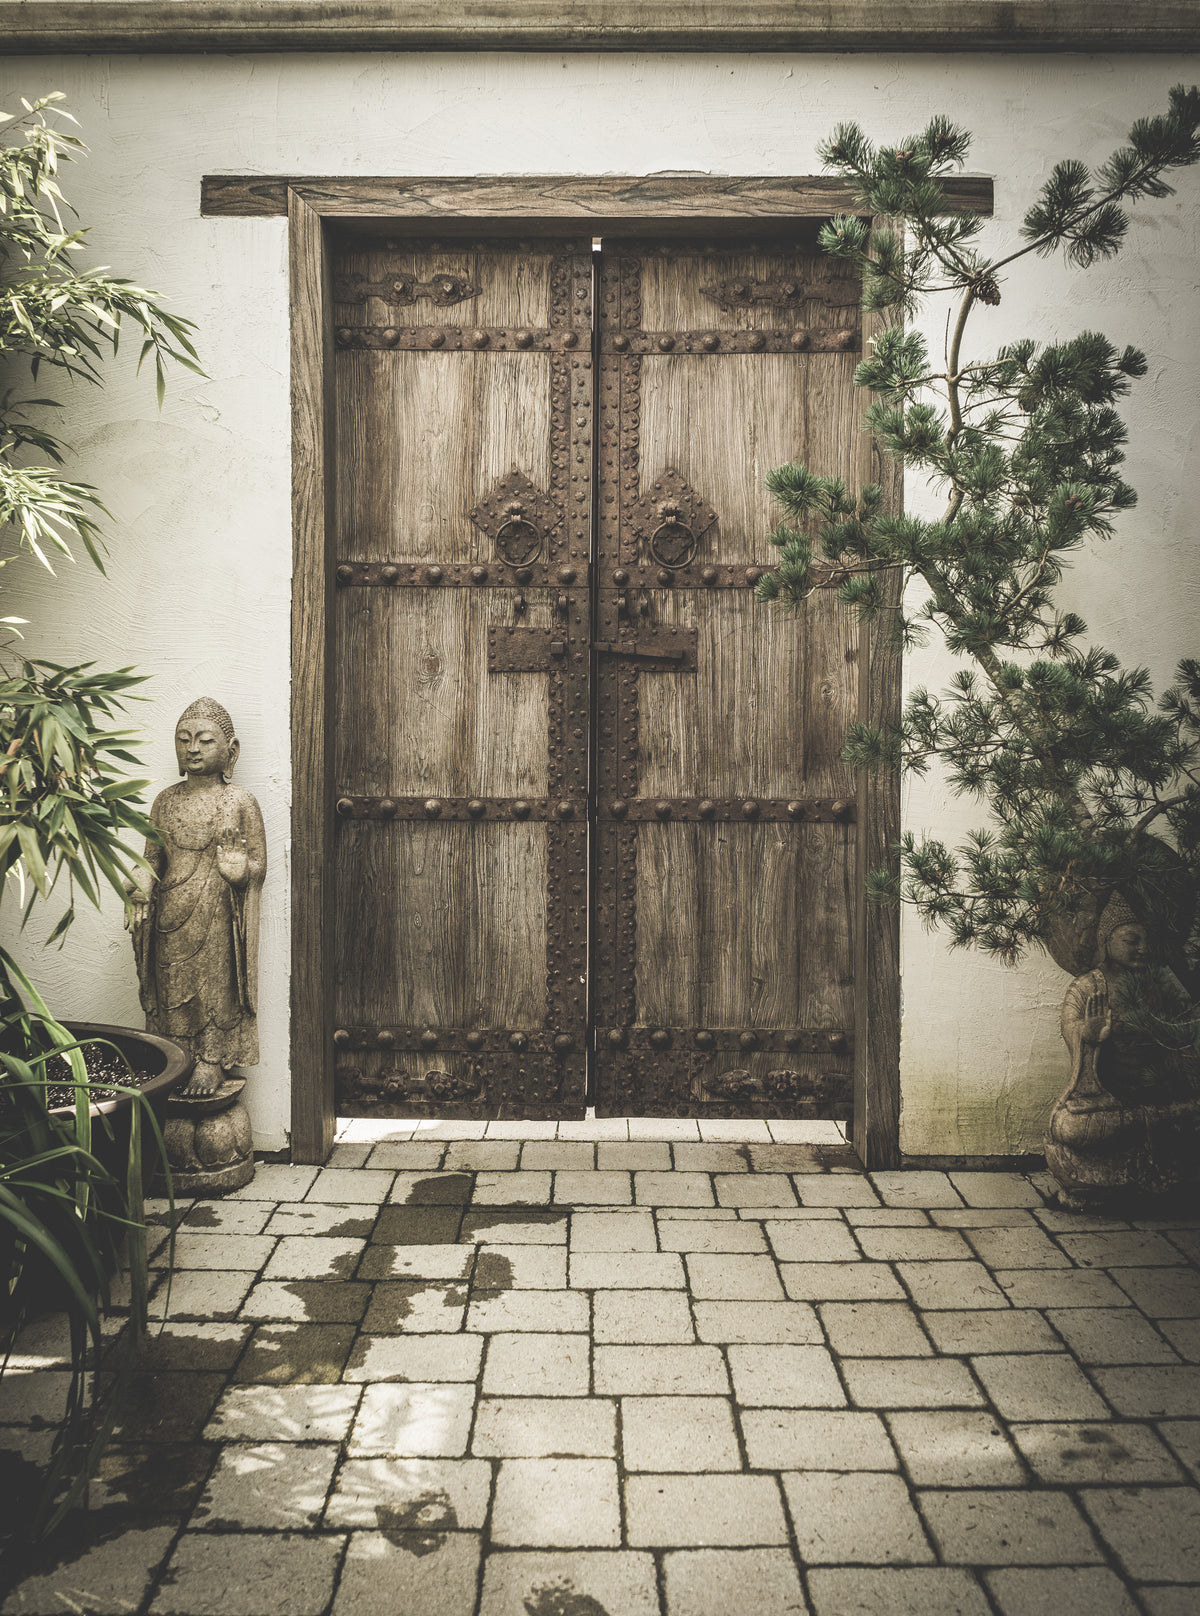 carved stone buddhas adorn ornate wooden doorway